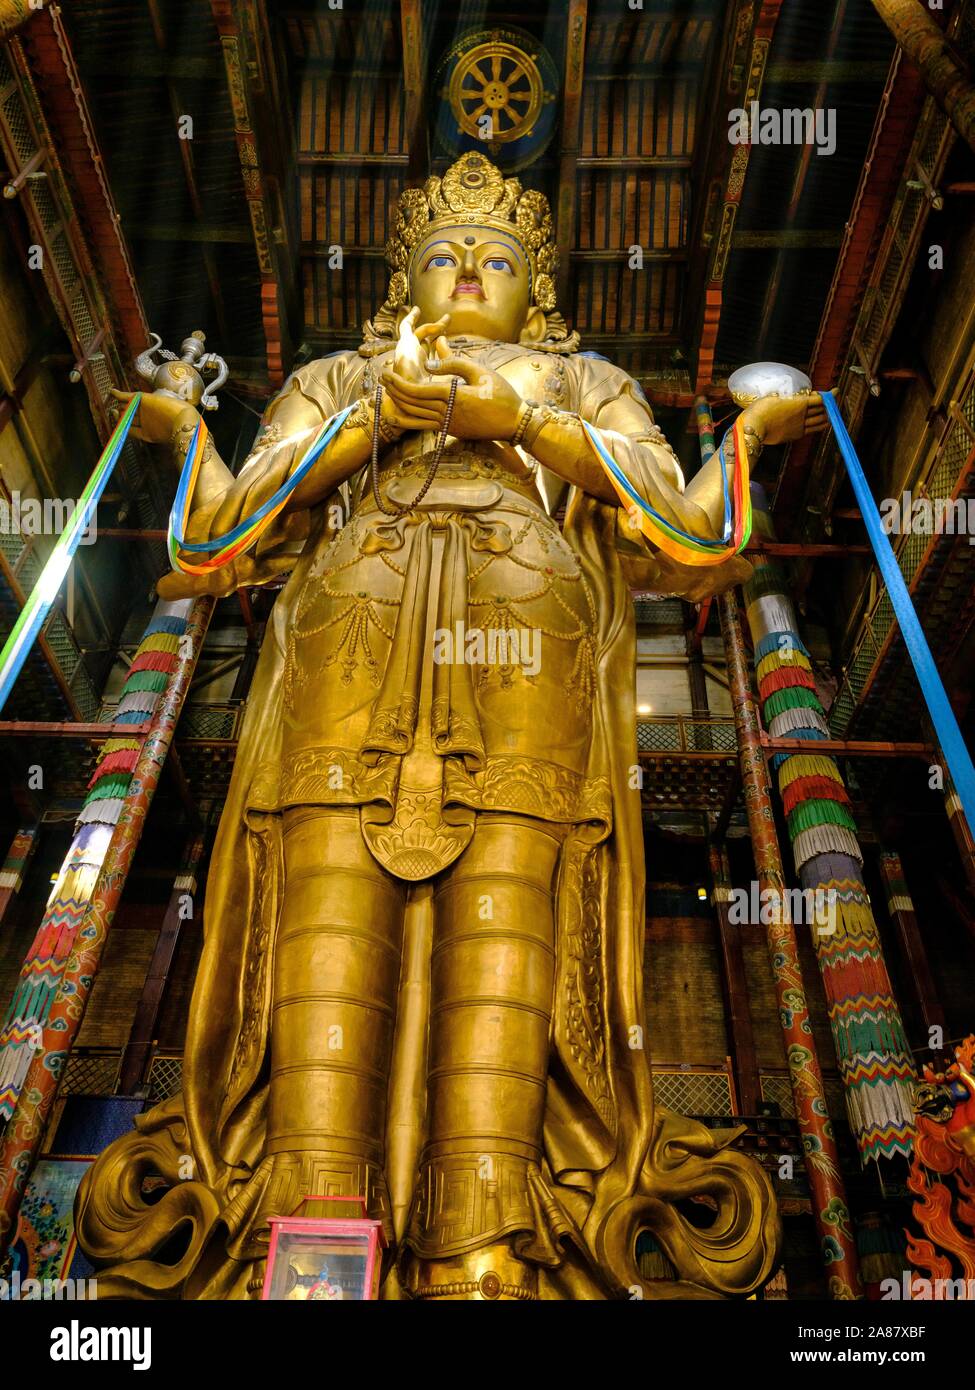 26 metro alto statua della dea Janraisig, Sanscrito Avalokiteshvara, nel monastero Gandan, Migjid Janraisig somma, Gandan Khiid, Ulan Bator Foto Stock